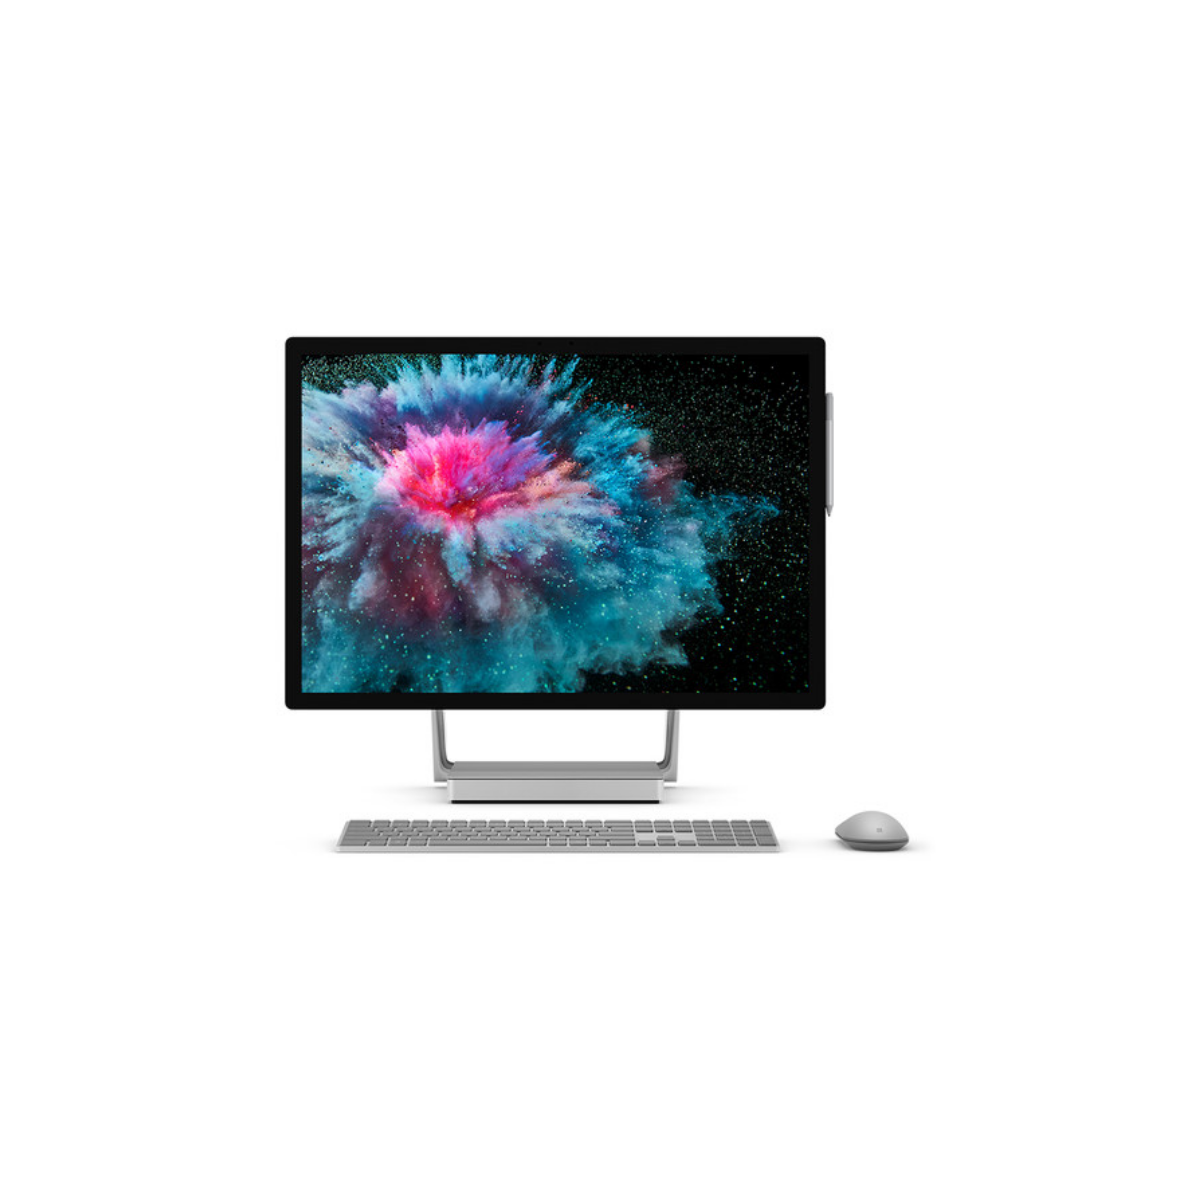 Microsoft Surface Studio 2 price | Tech Score